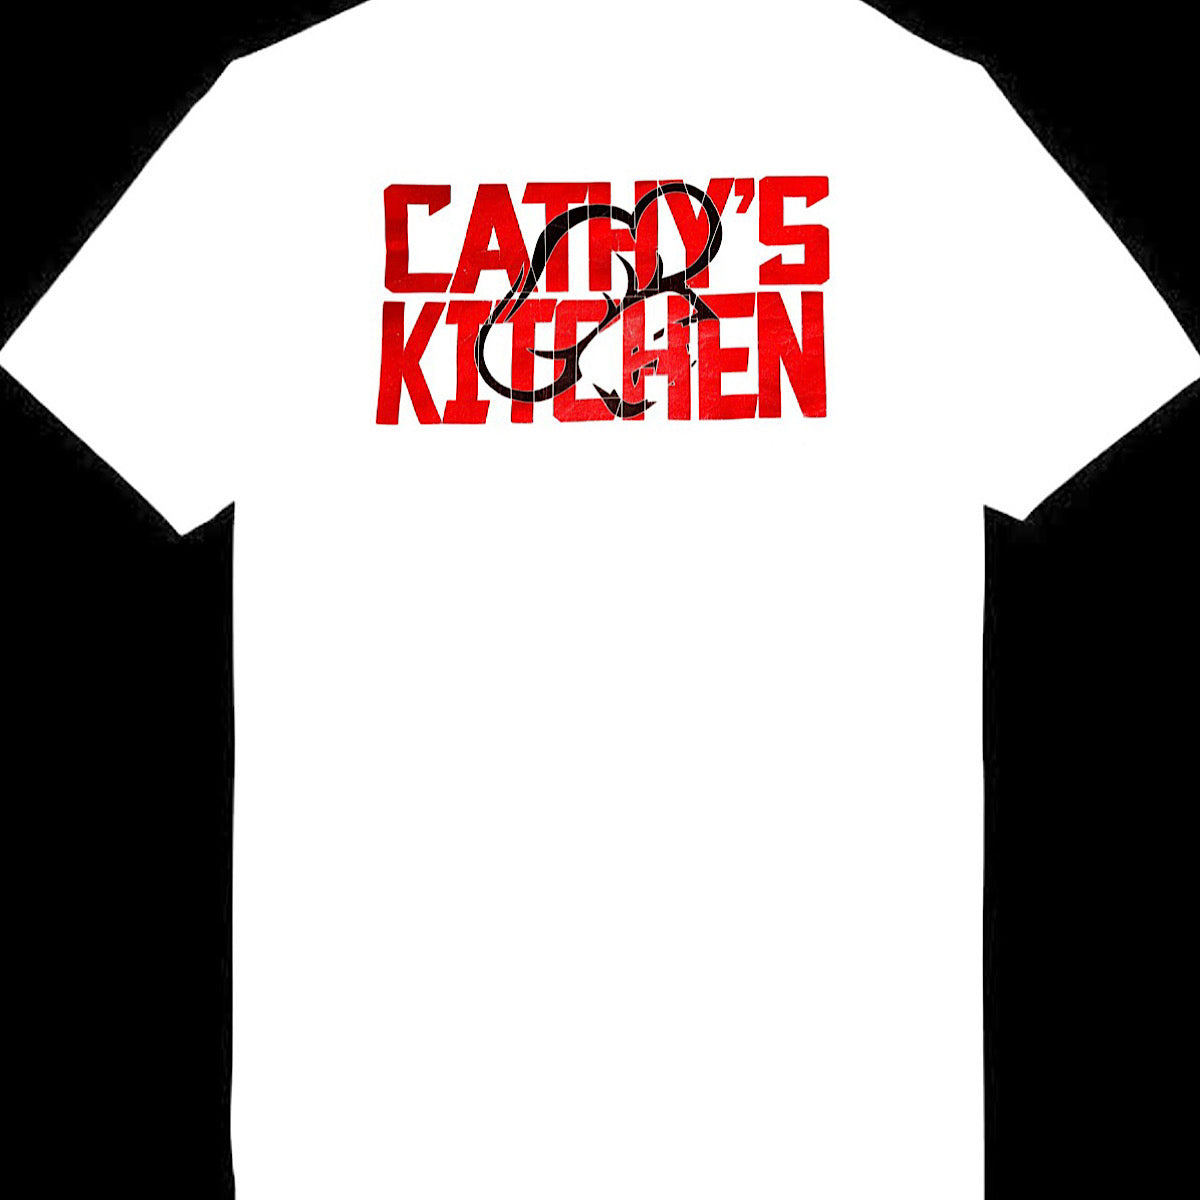 Cathy's Kitchen White T-Shirt (Style 2)